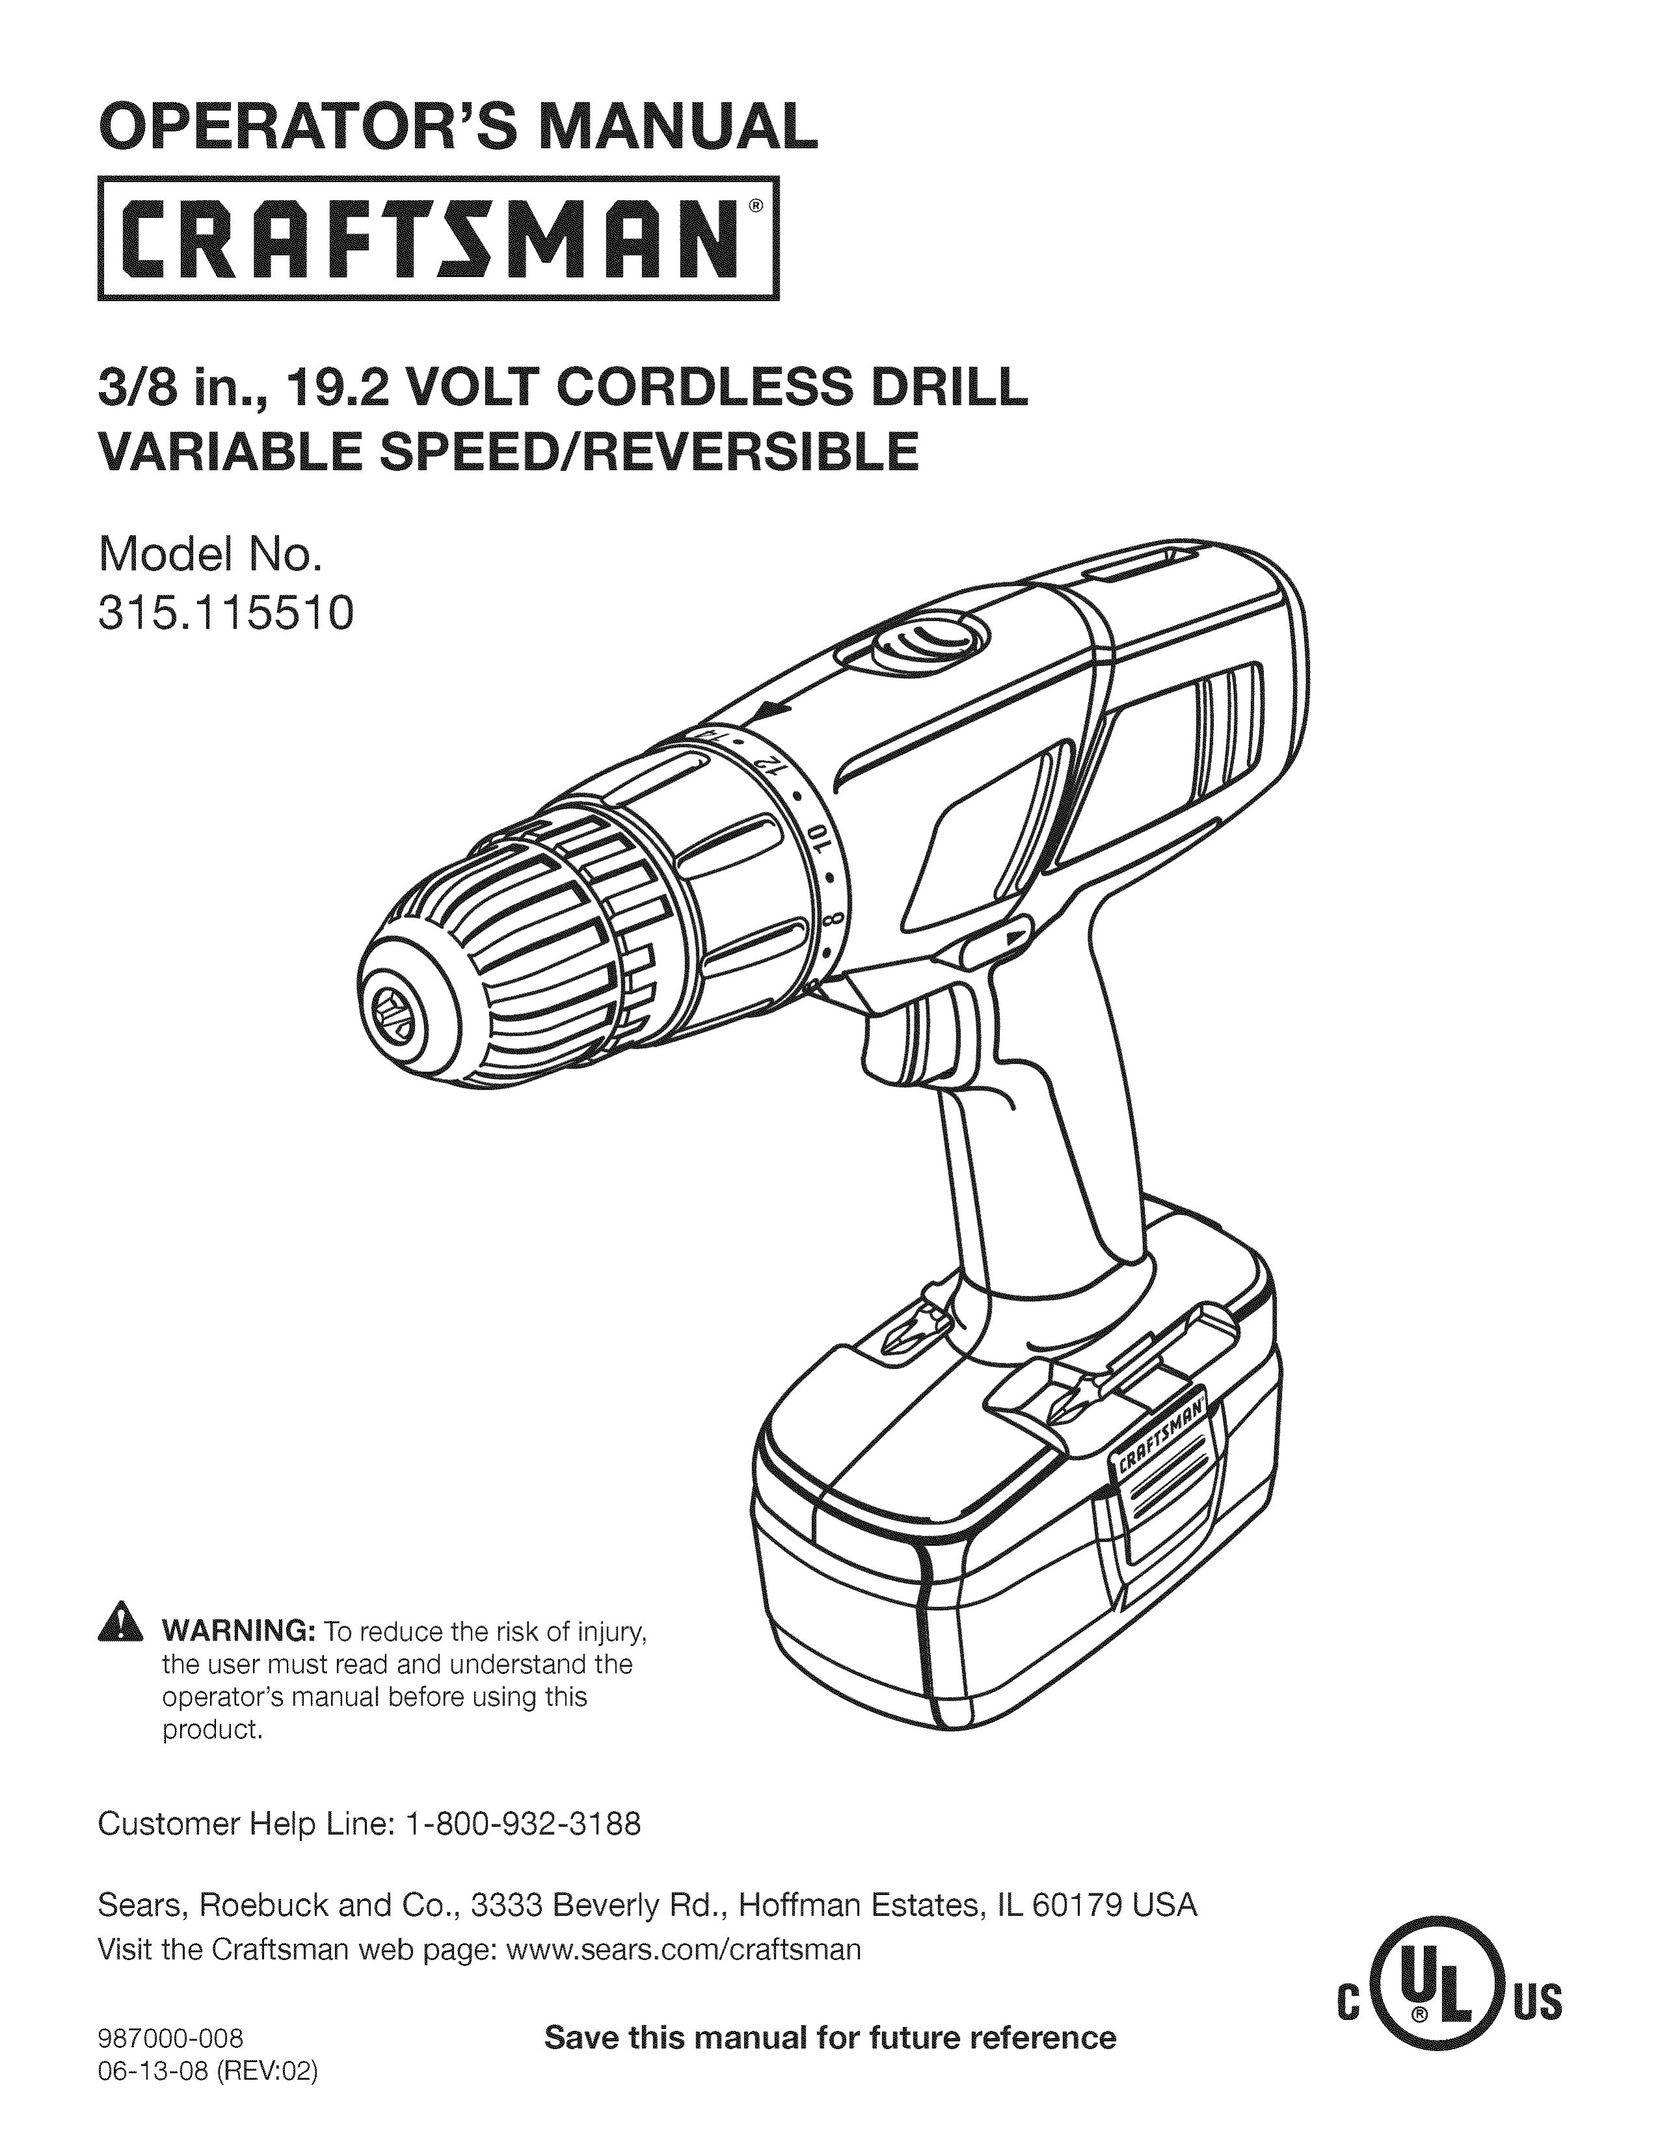 Craftsman 11551 Cordless Drill User Manual